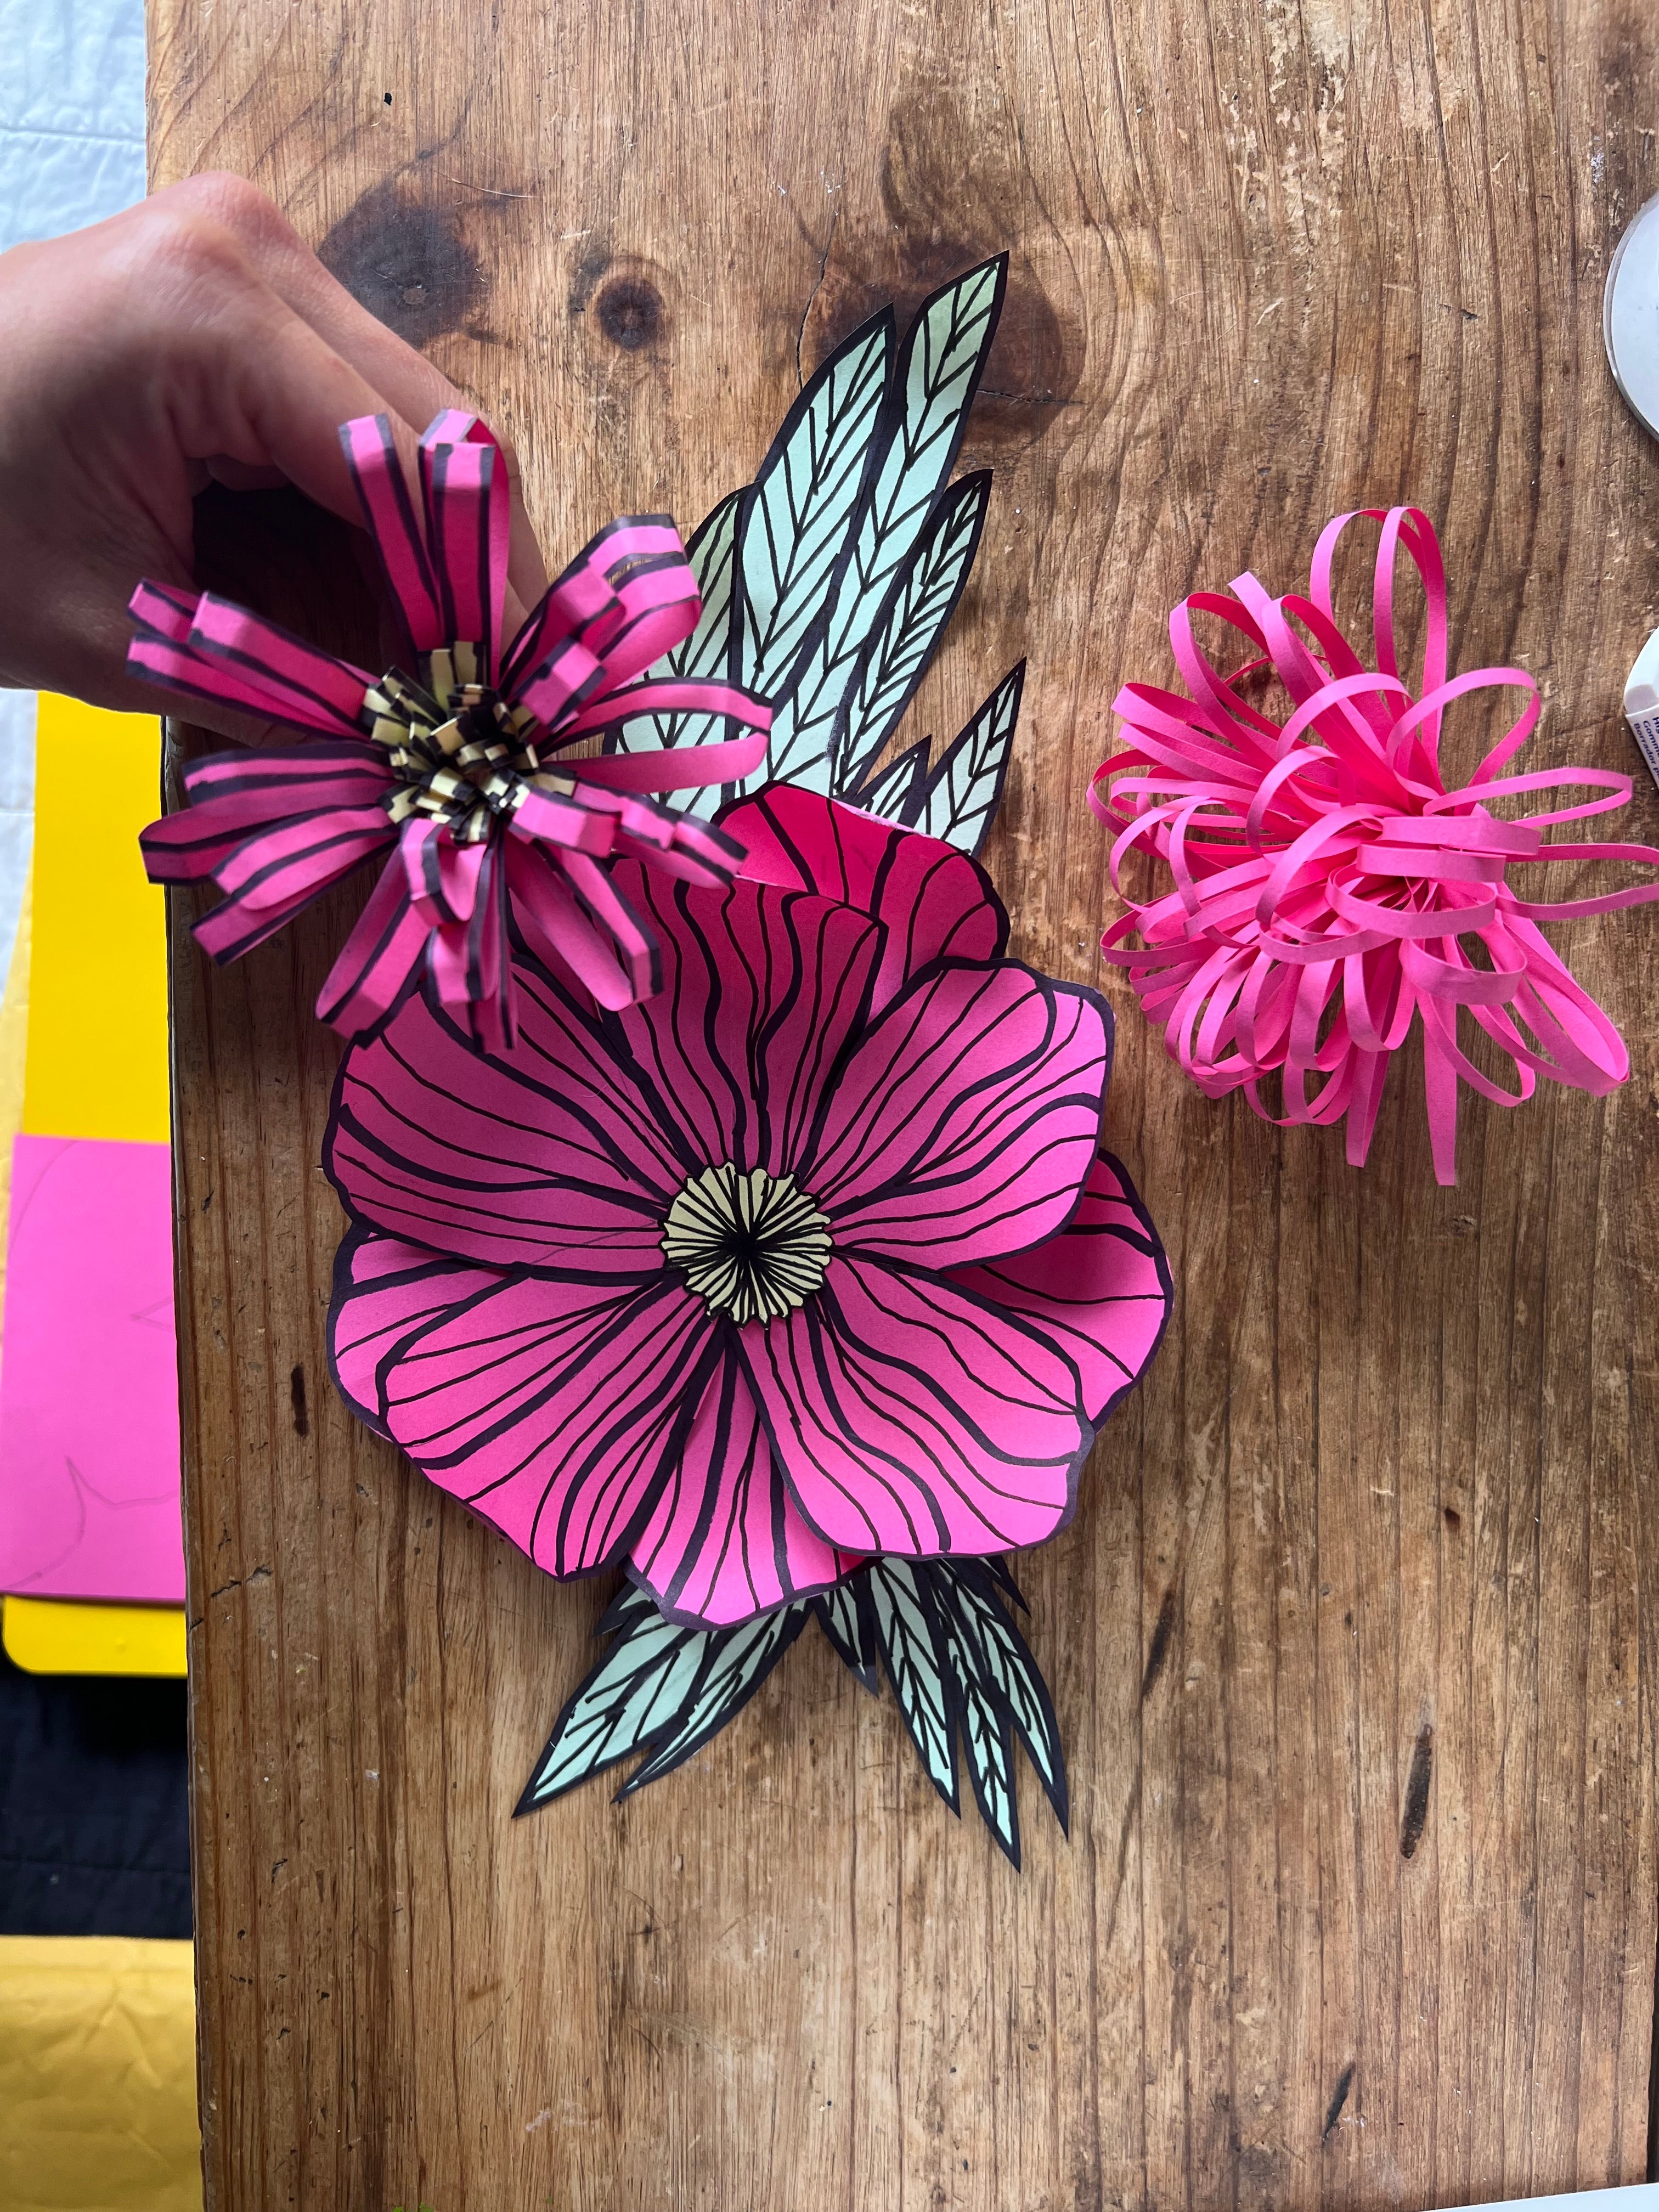 Corporate Workshops - Paper Flower Making + More